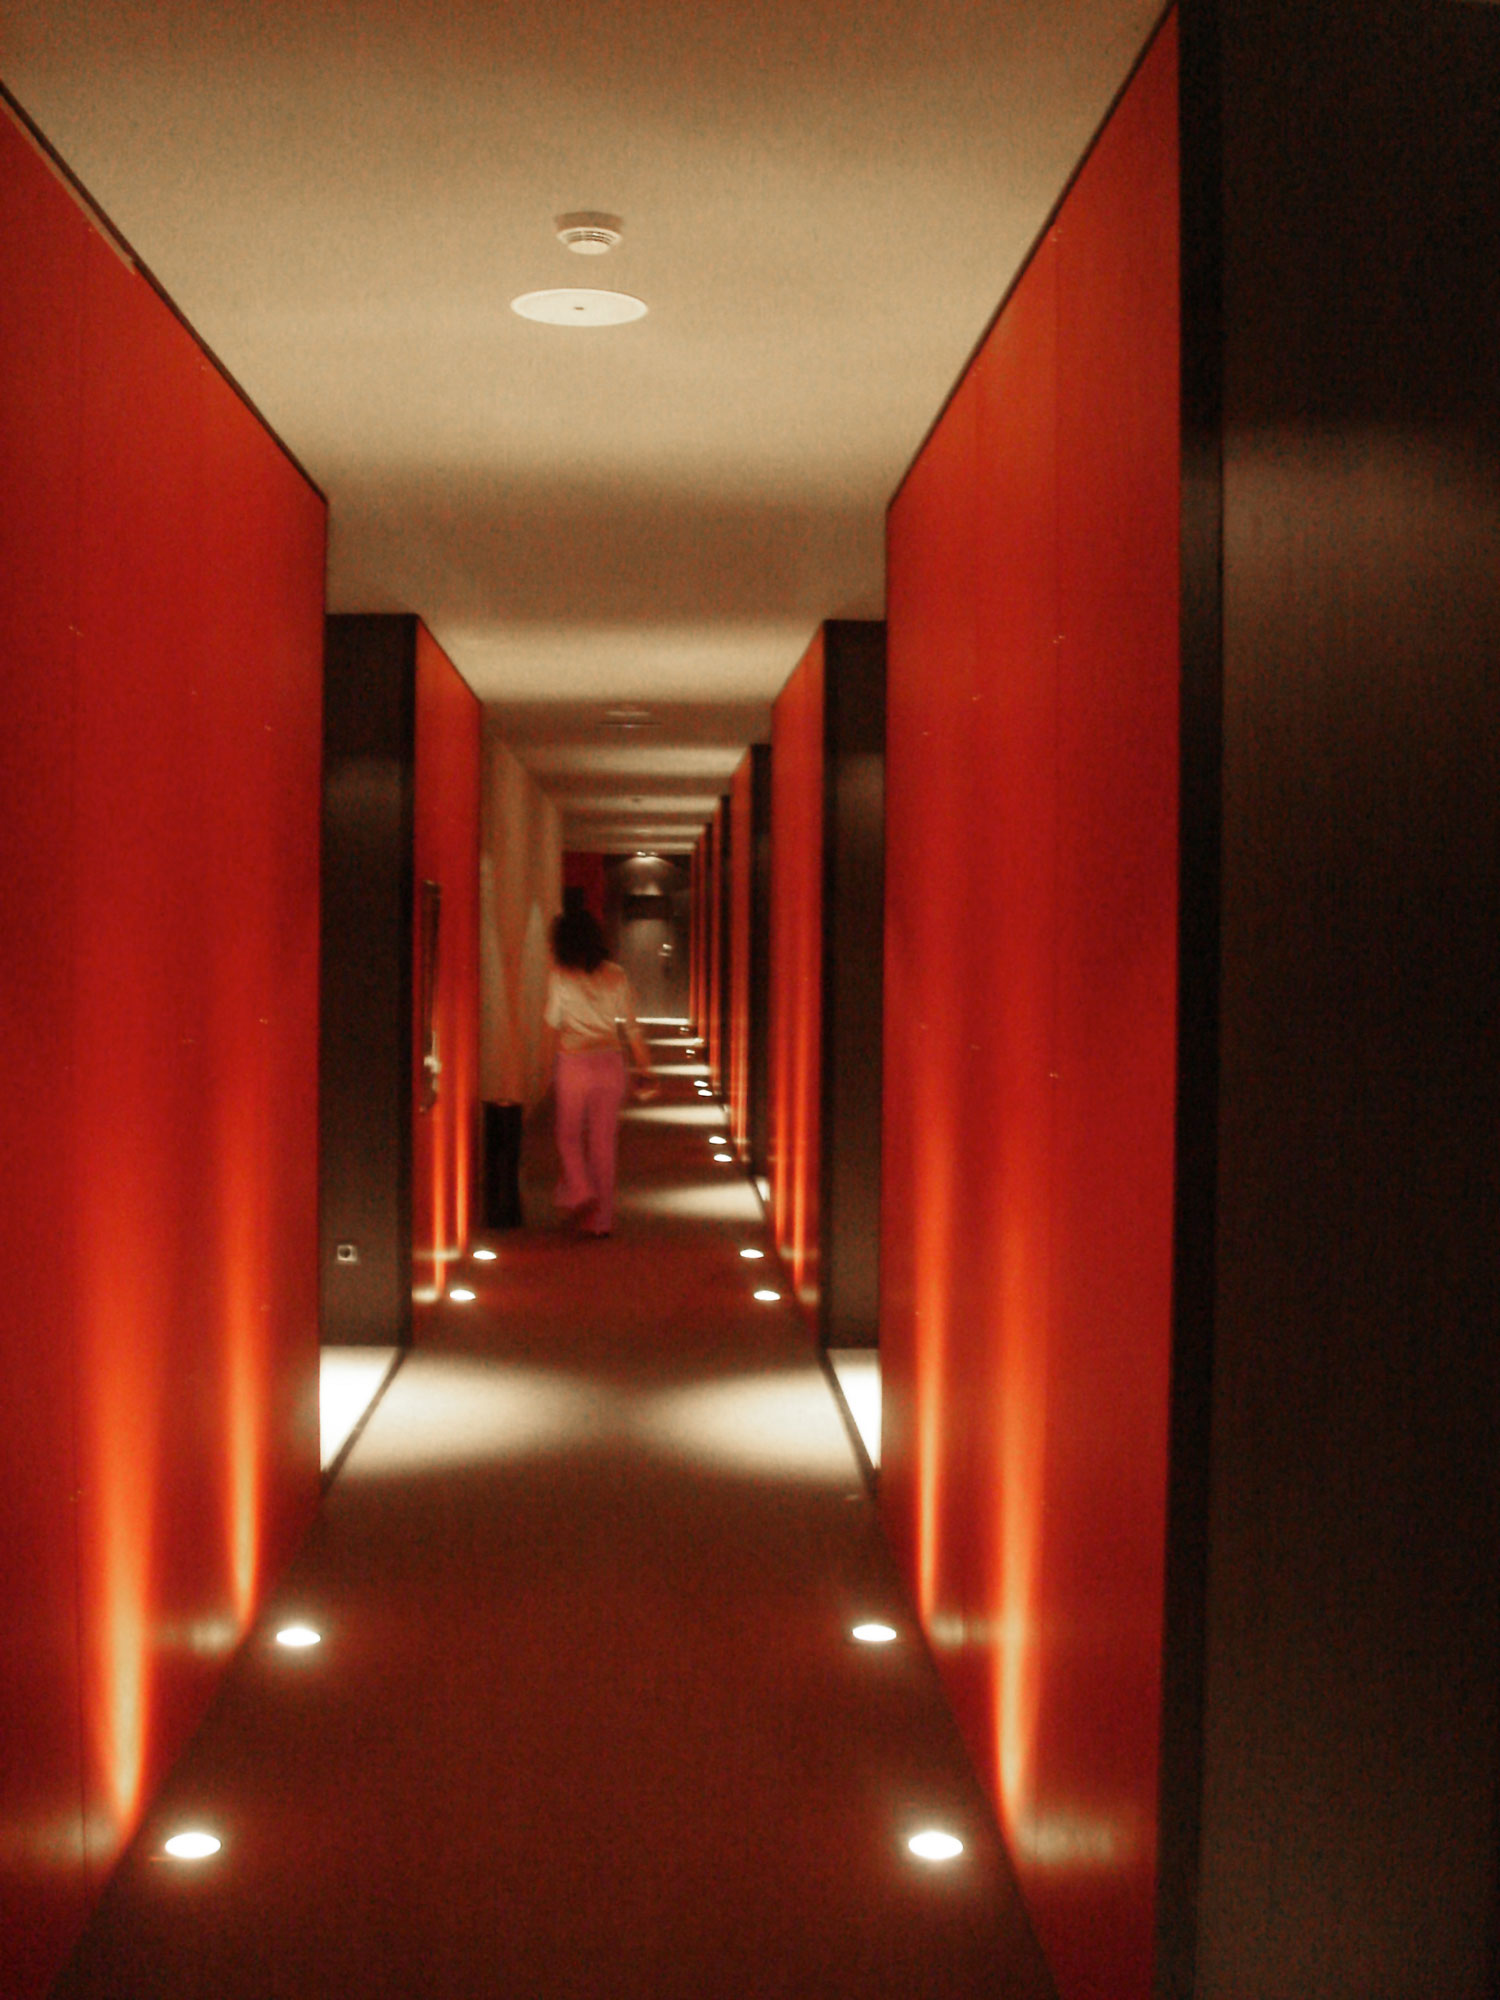 Imagen del proyecto Hotel en Madrid